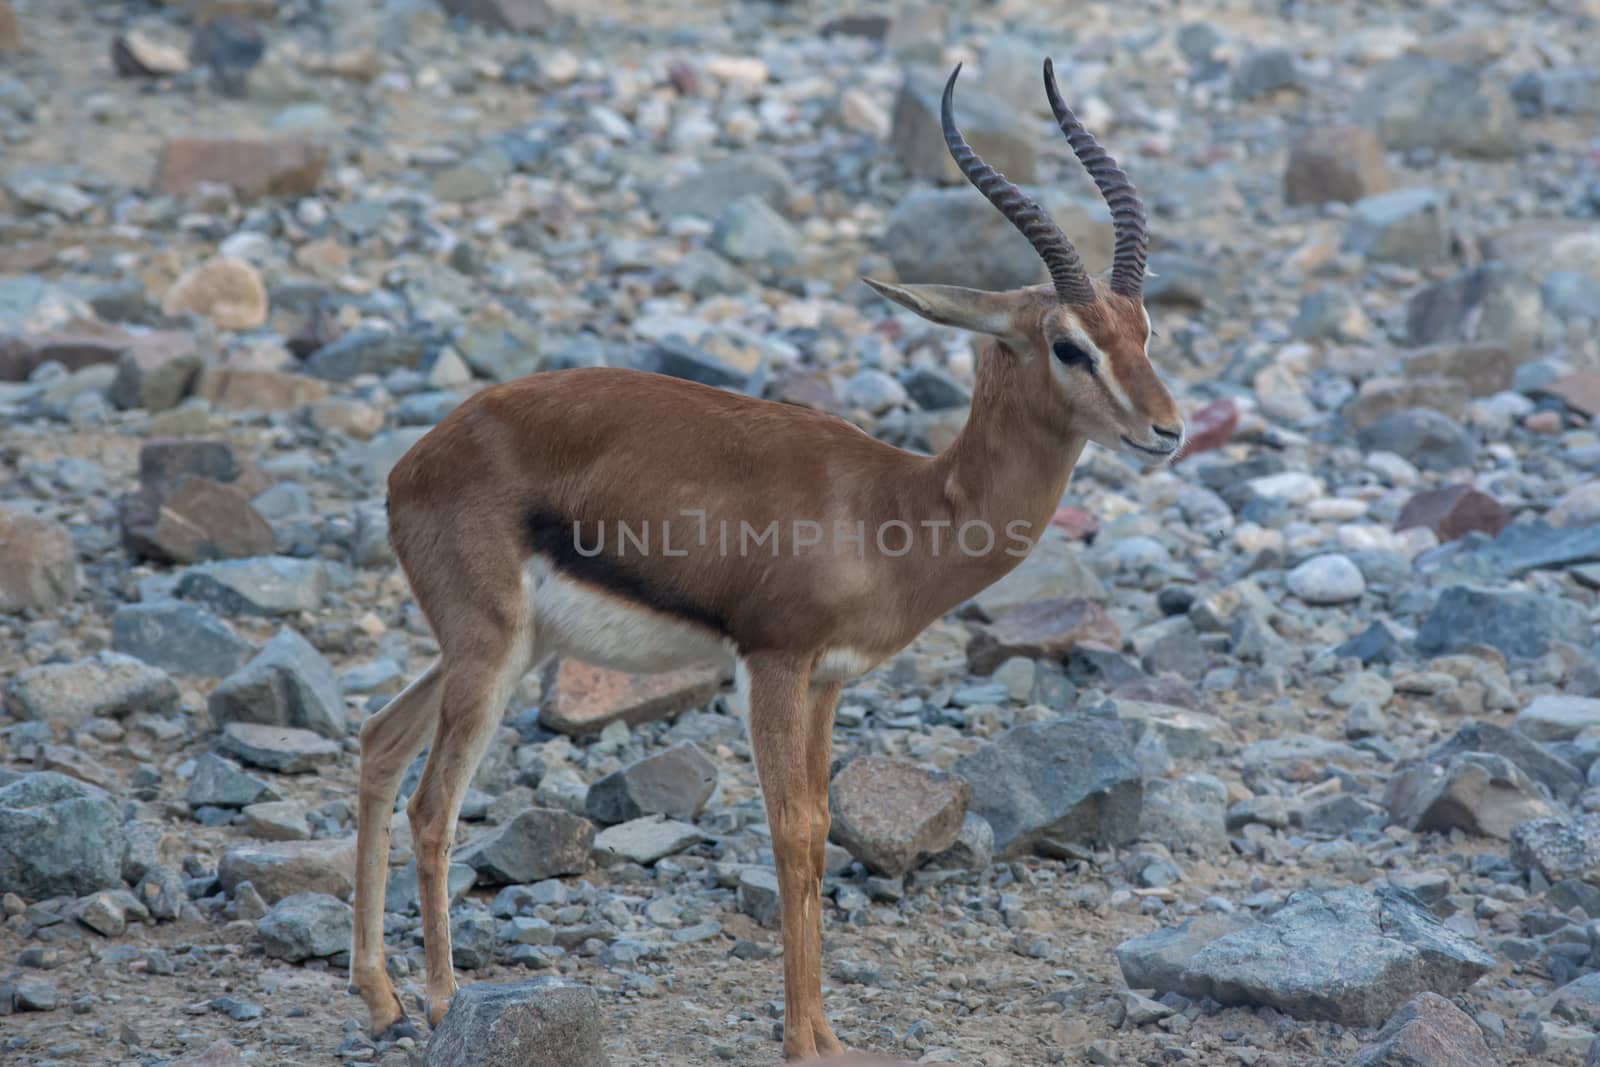 Arabian Sand Gazelle (Gazella marica) in the rocks of the United by kingmaphotos